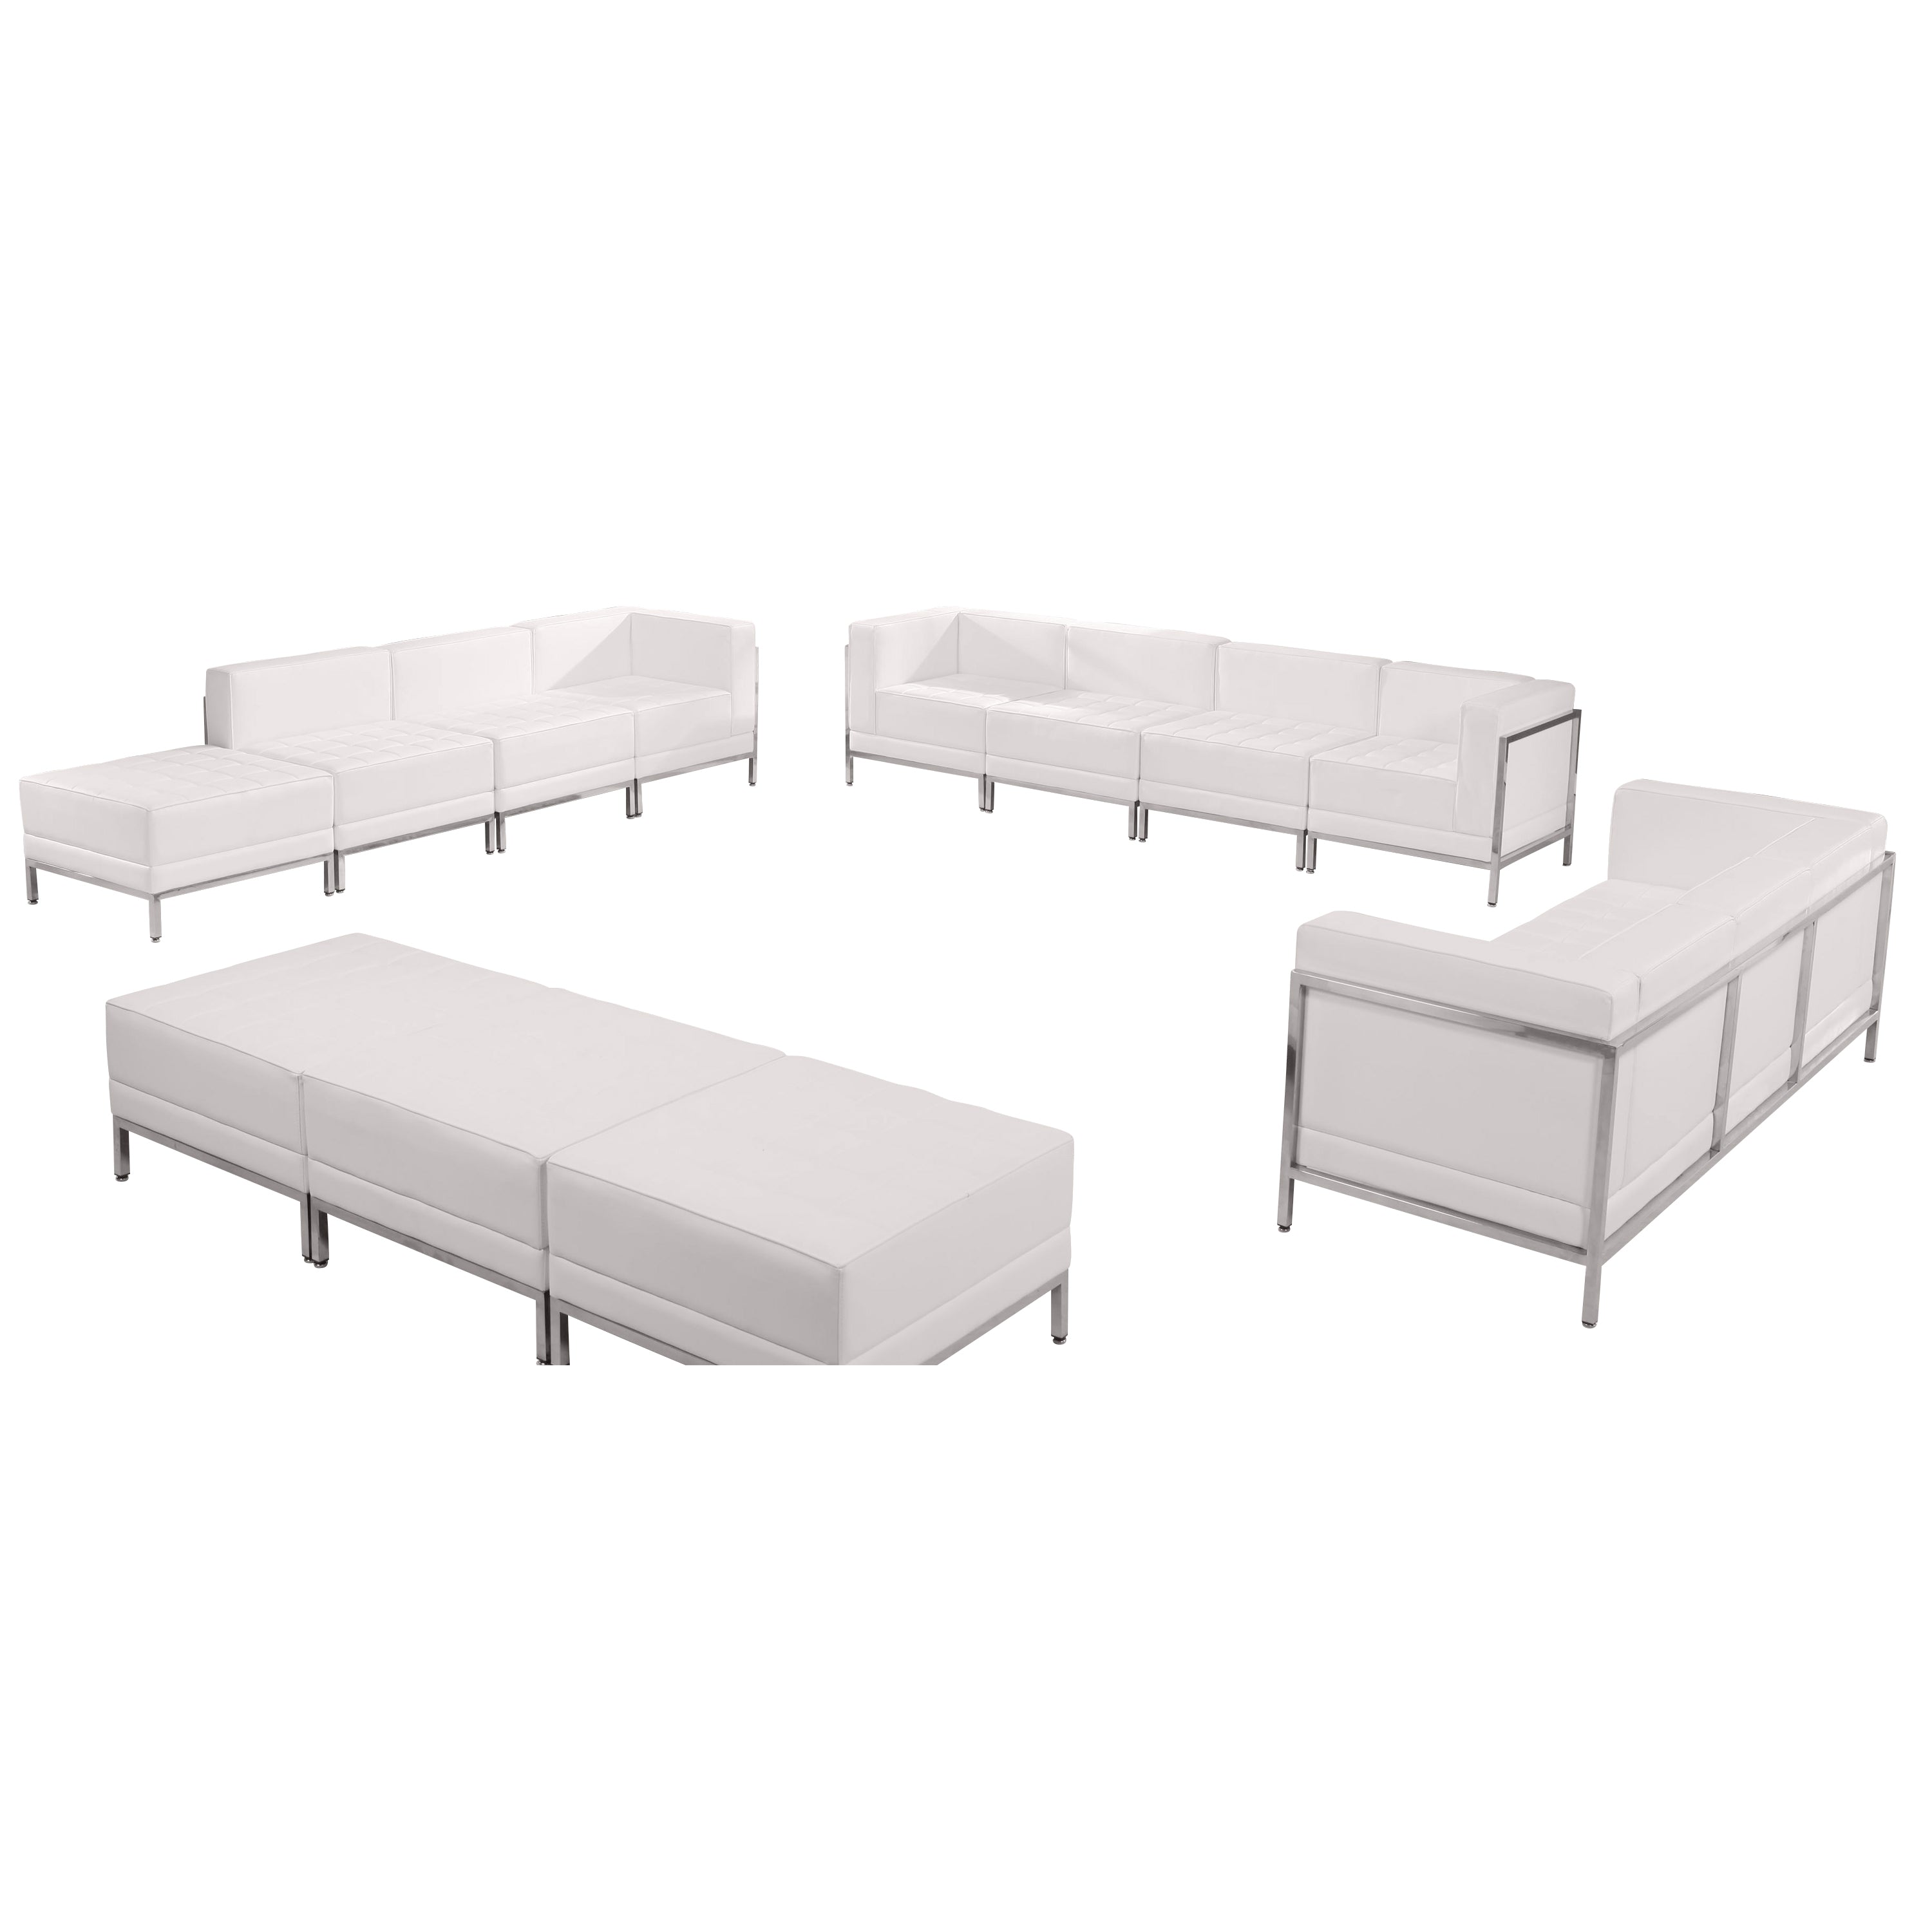 HERCULES Imagination Series LeatherSoft Sofa, Lounge & Ottoman Set, 12 Pieces-Modular Reception Set-Flash Furniture-Wall2Wall Furnishings